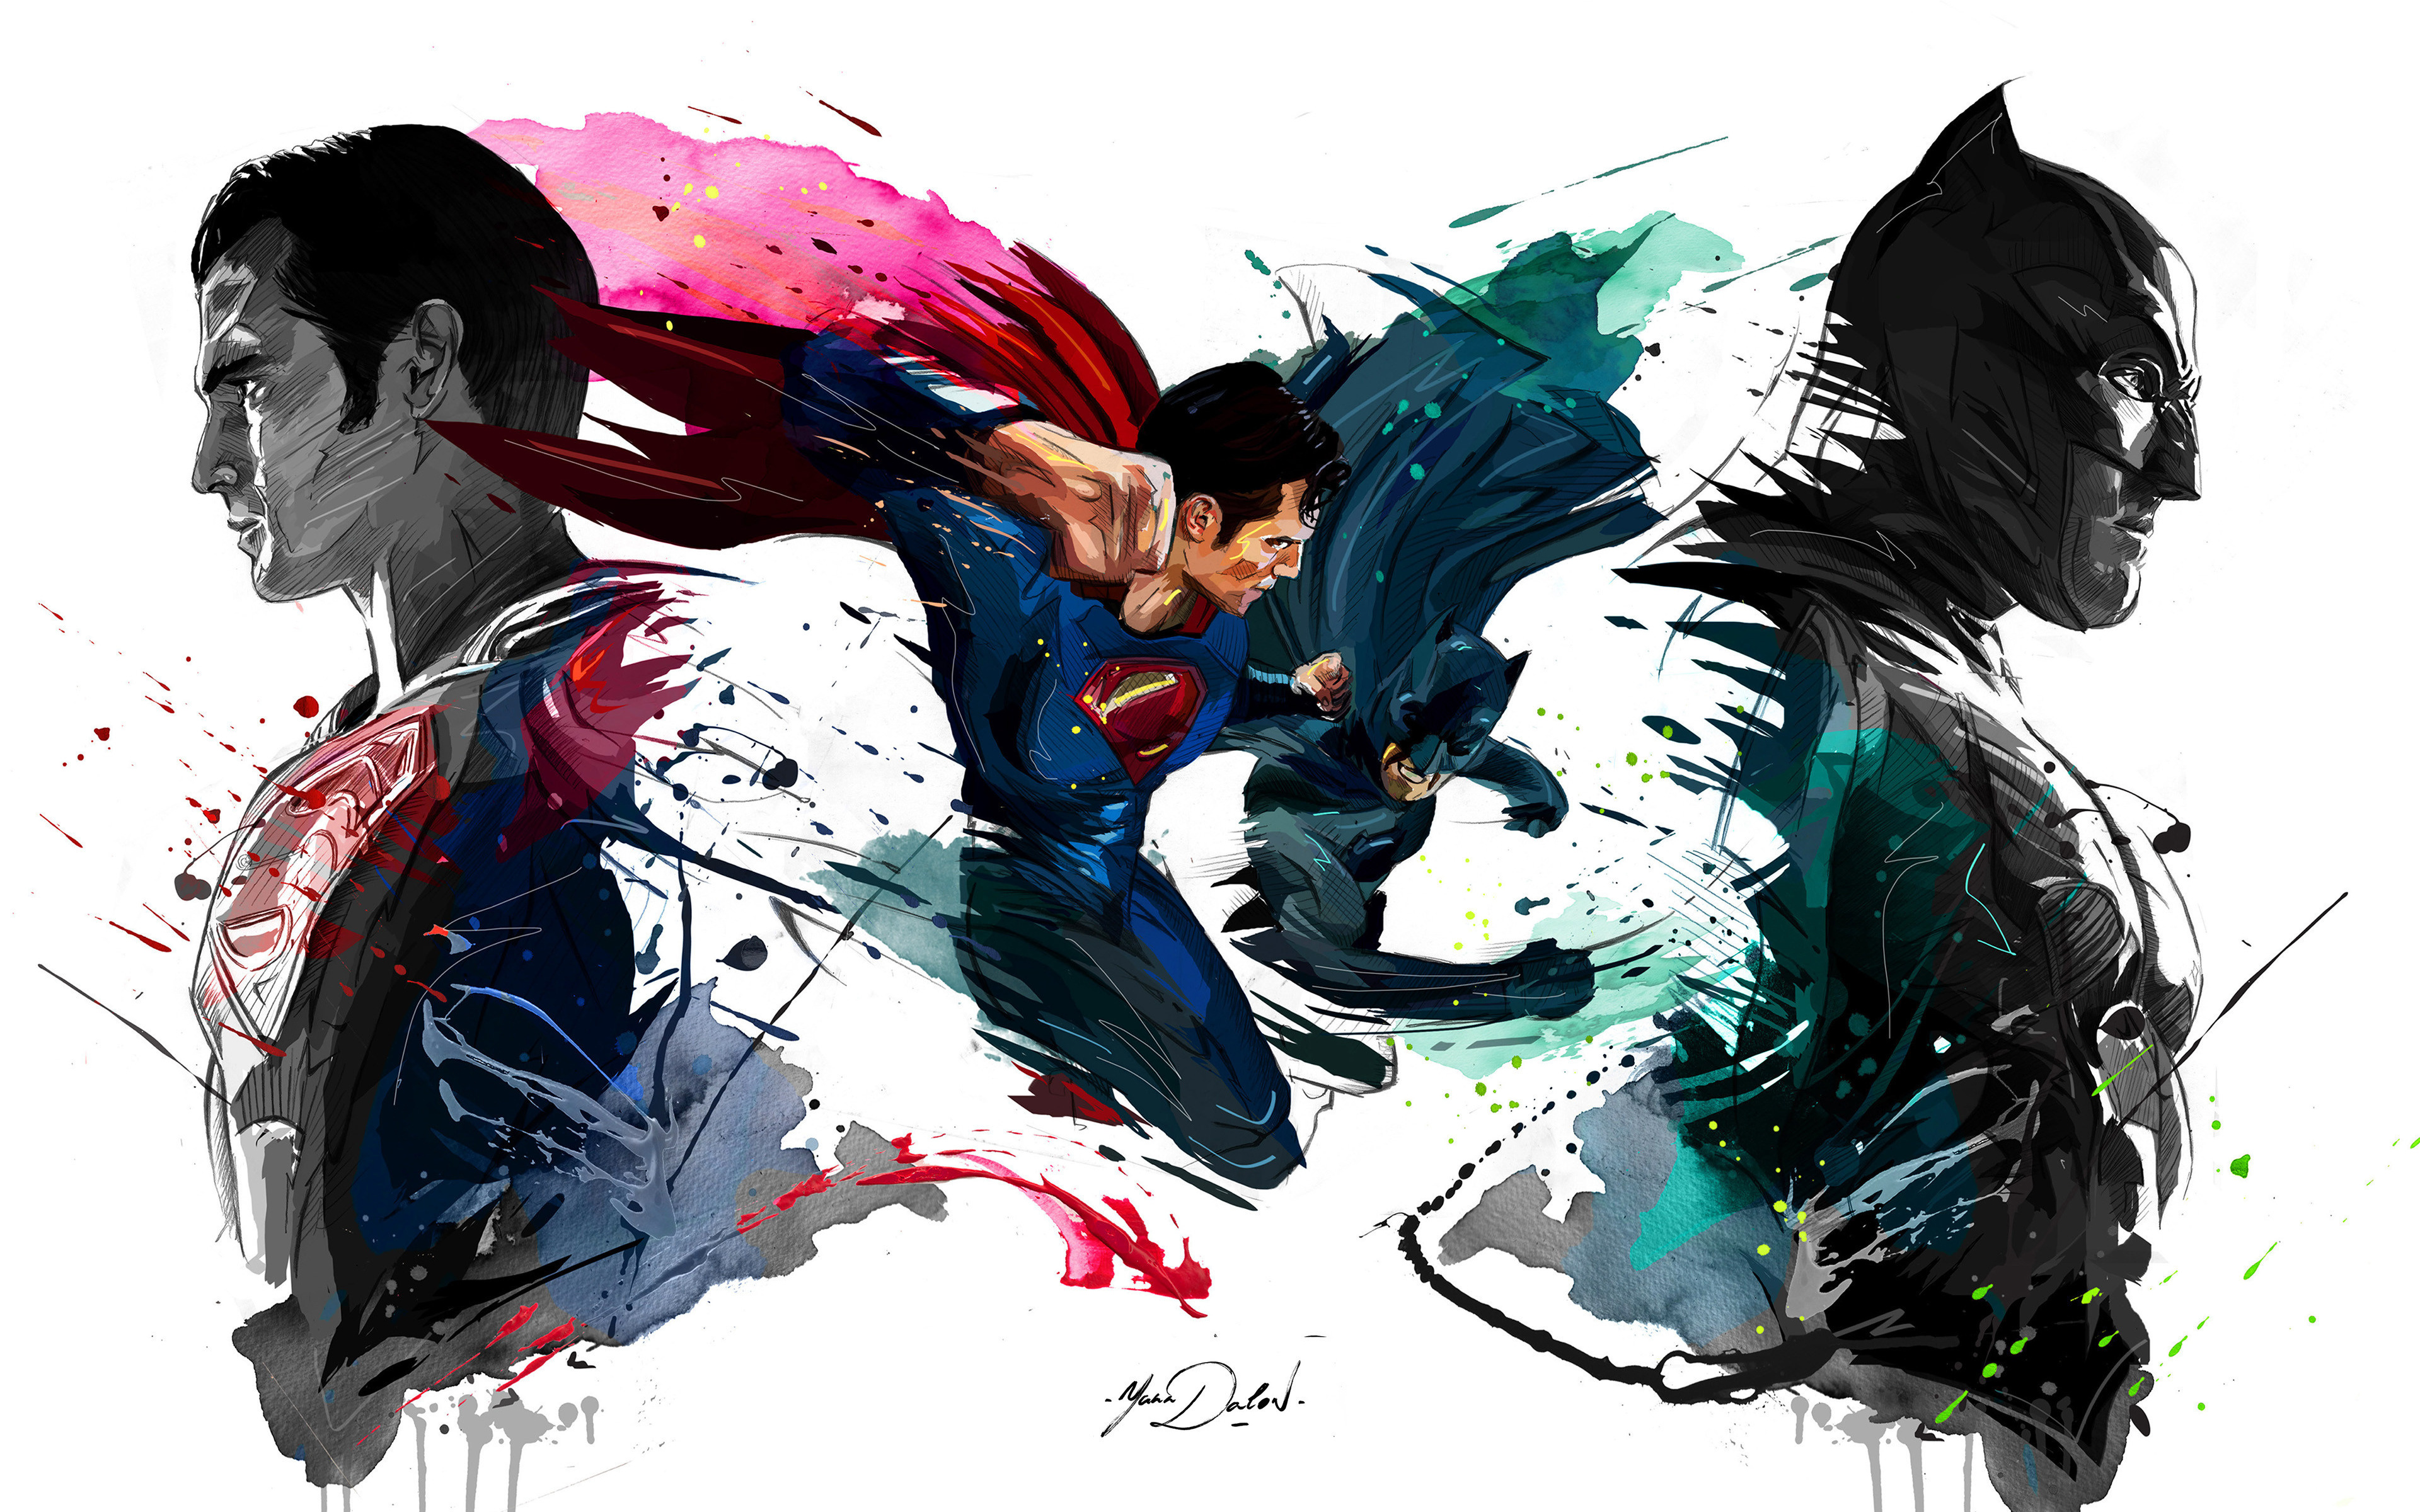 Cockham superheroes. Бэтмен против Супермена комикс. Супермен против Бэтмена комикс. Batman vs Superman. Супергерои арт.